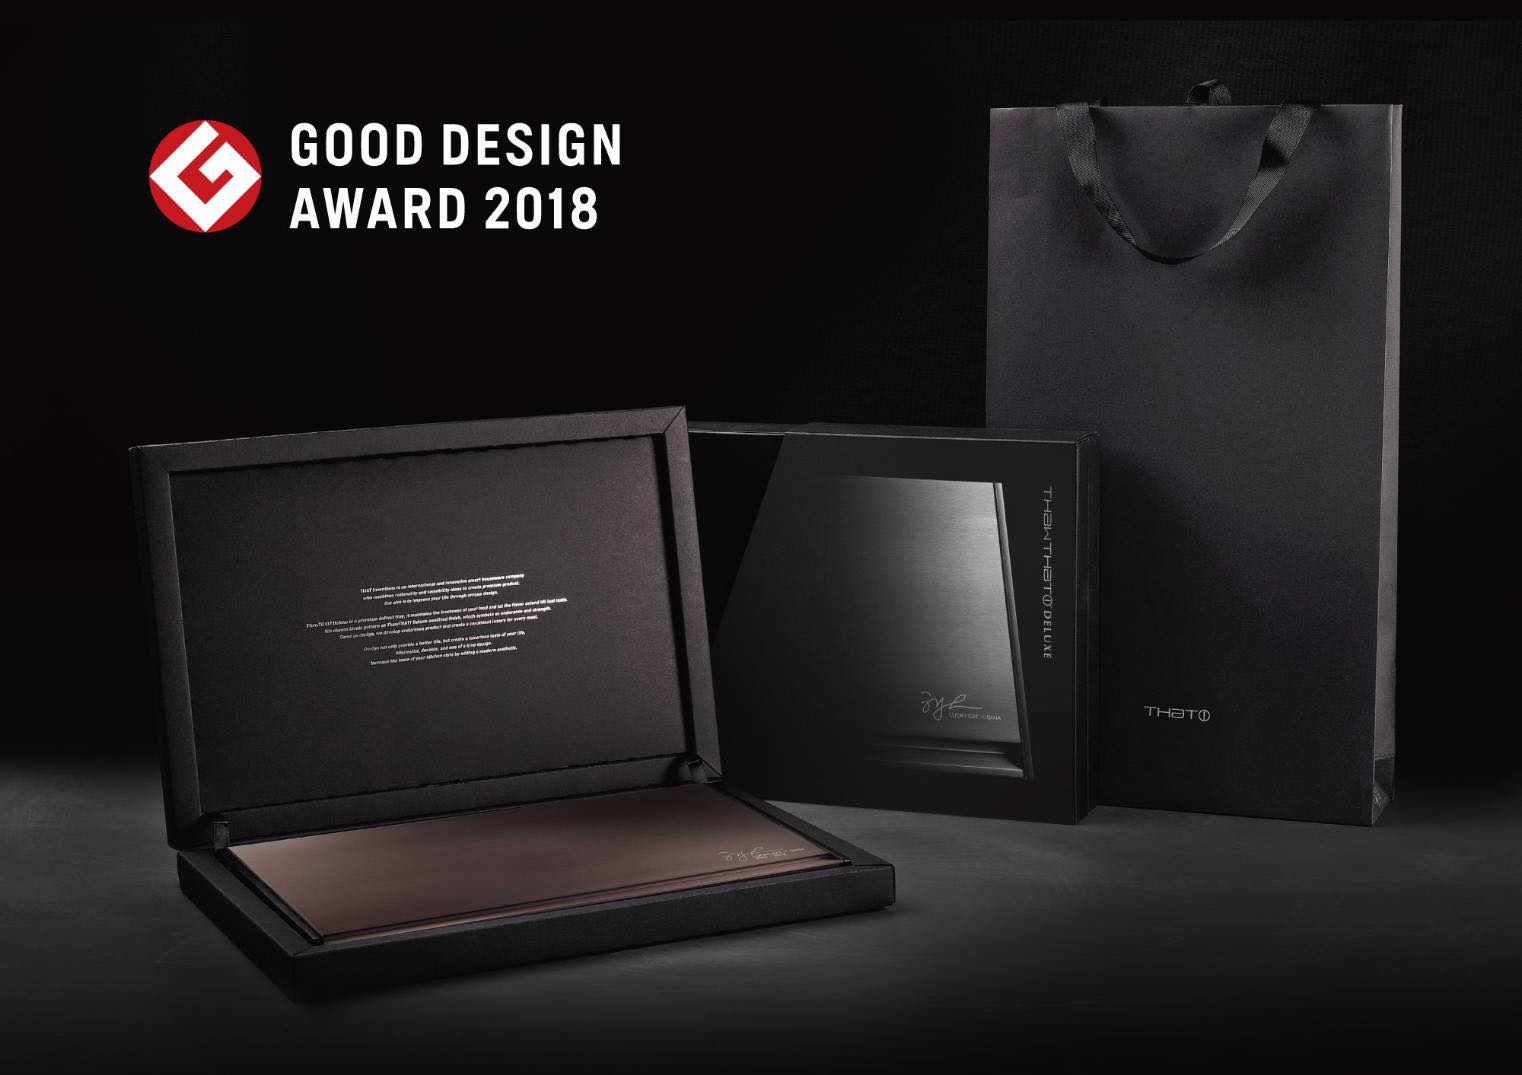 Trifecta! ThawTHAT! Deluxe wins Good Design award